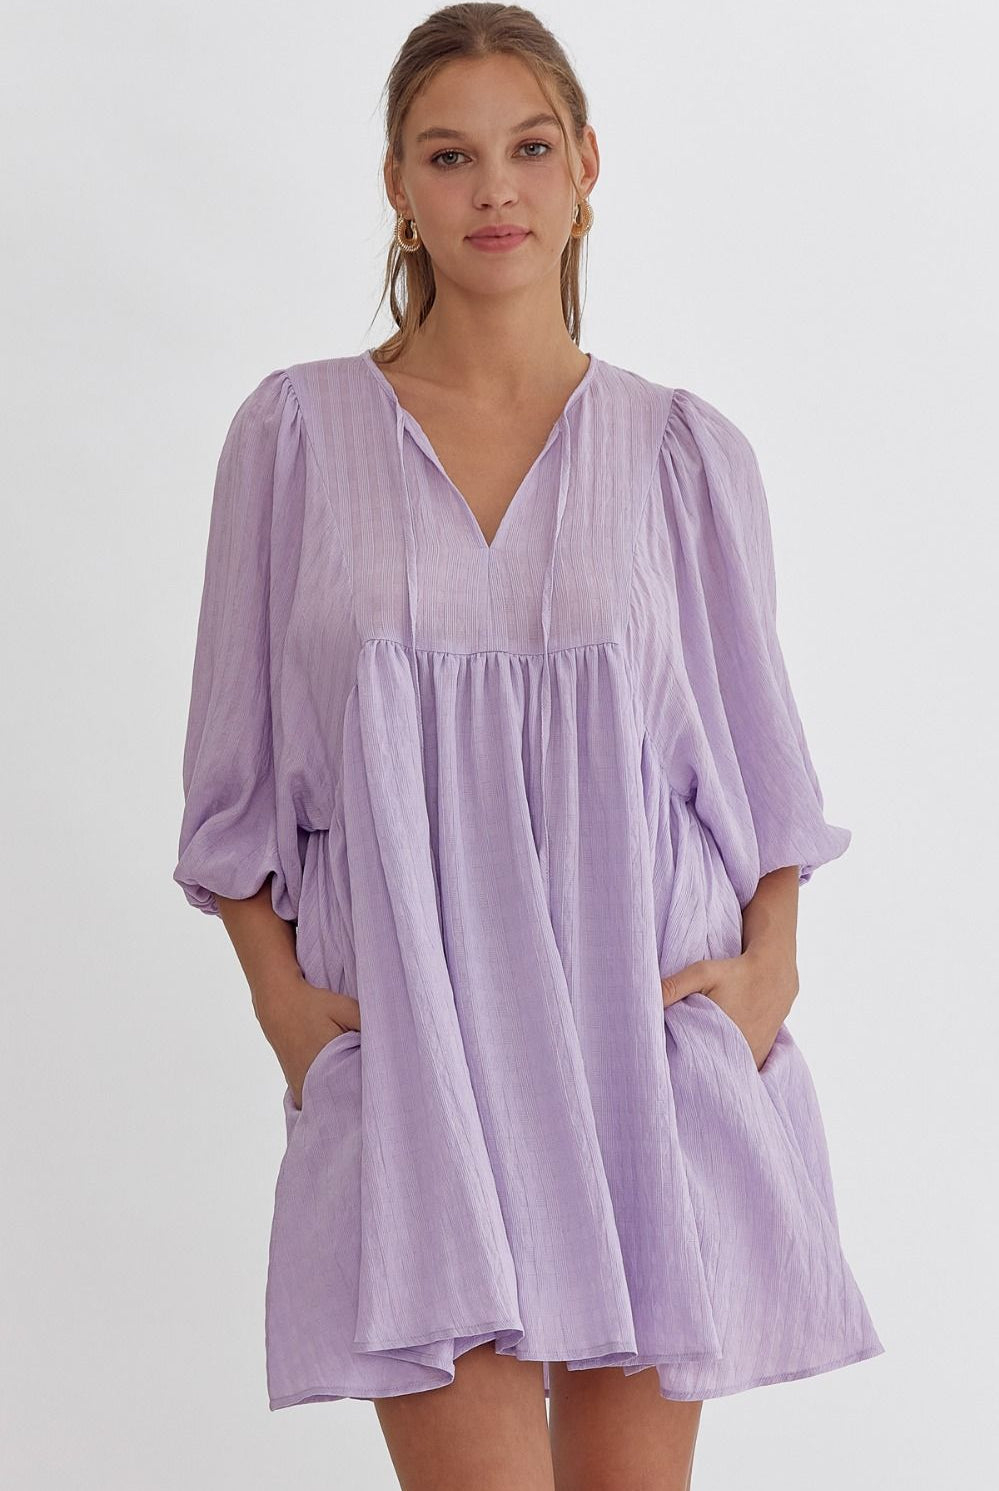 Emmie Lou Dress w/ Pockets-Short Dresses-Podos Boutique, a Women's Fashion Boutique Located in Calera, AL